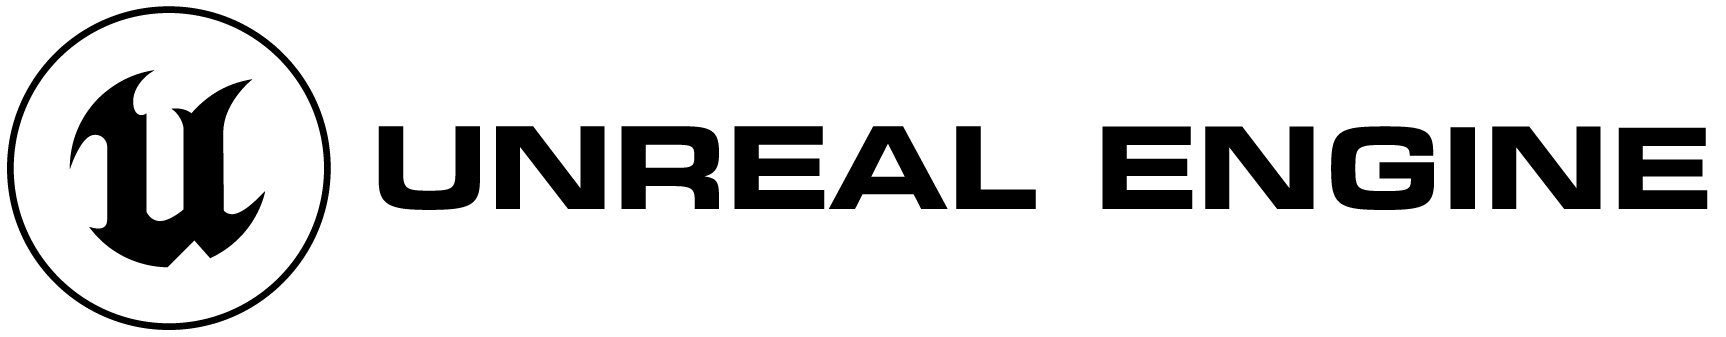 UE Logo horizontal unreal engine black